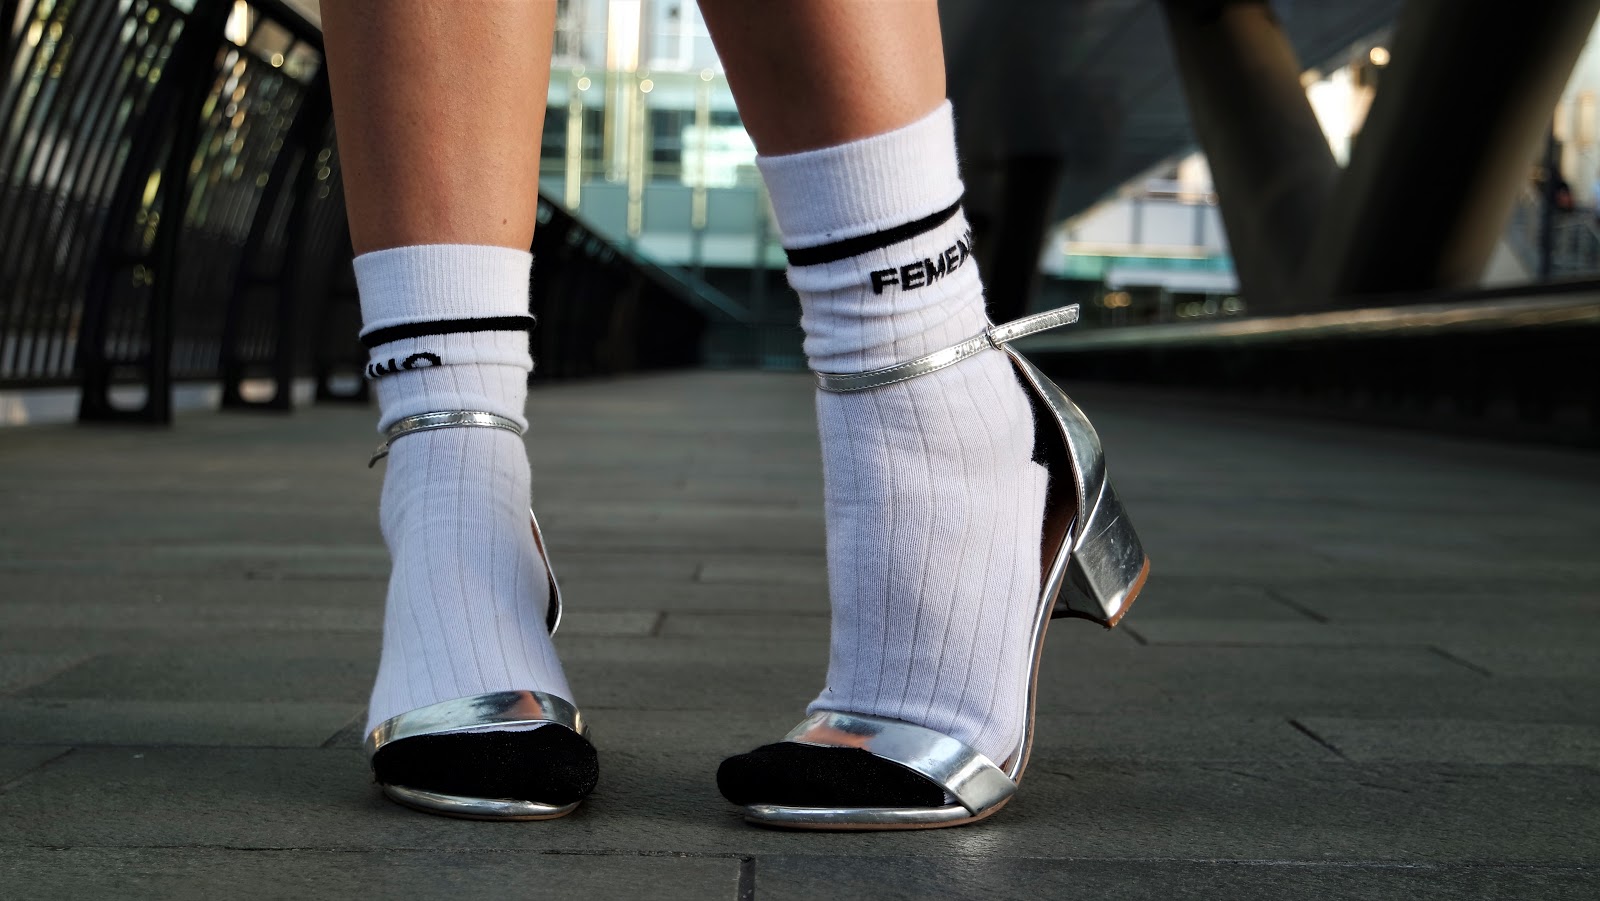 Adidas superstar sandals trampling photos